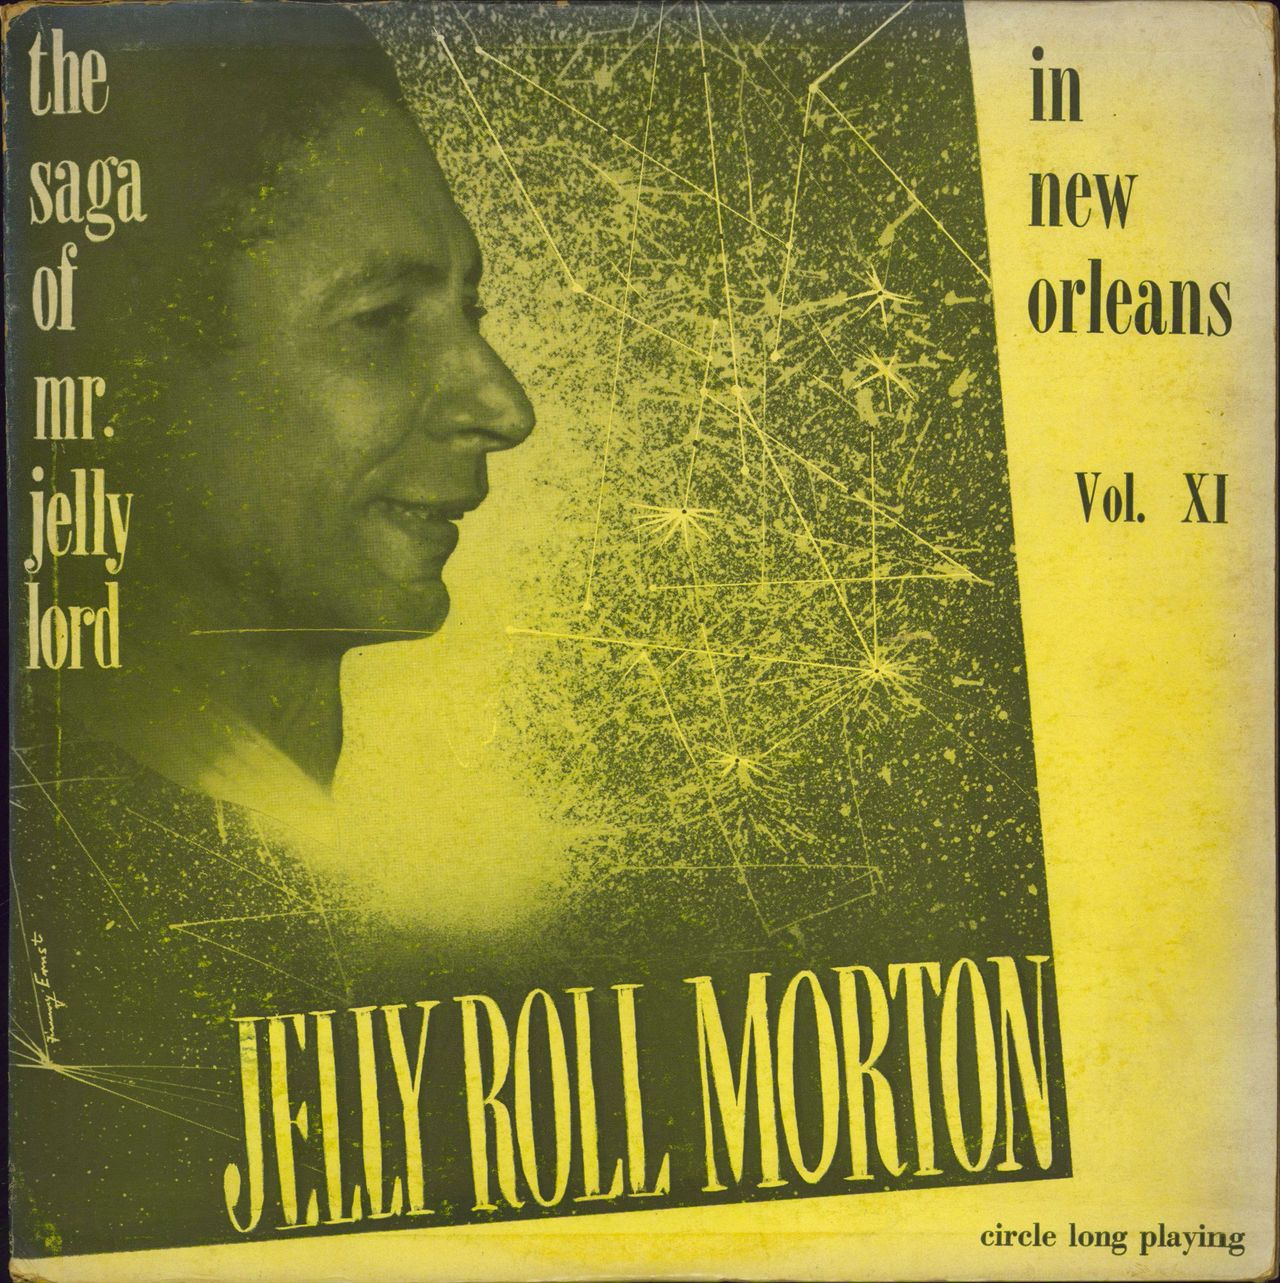 Jelly Roll Morton The Saga Of Mr. Jelly Lord - Vol. XI (In New Orleans) US vinyl LP album (LP record) L14011